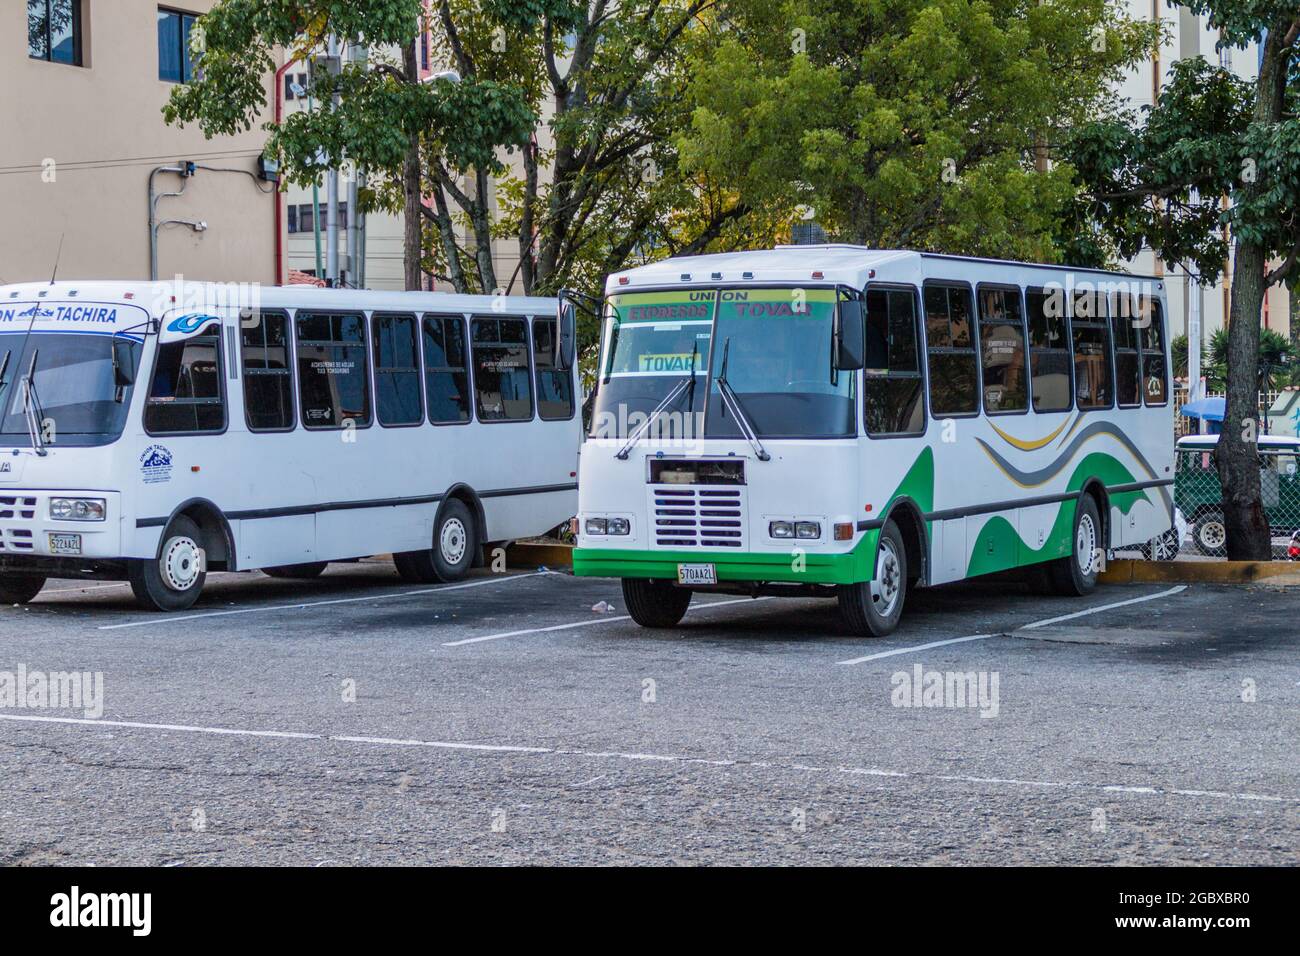 MERIDA, VENEZUELA - AUGUST 20, 2015: Small buses are waiting at a Bus station in Merida, Venezuela Stock Photo